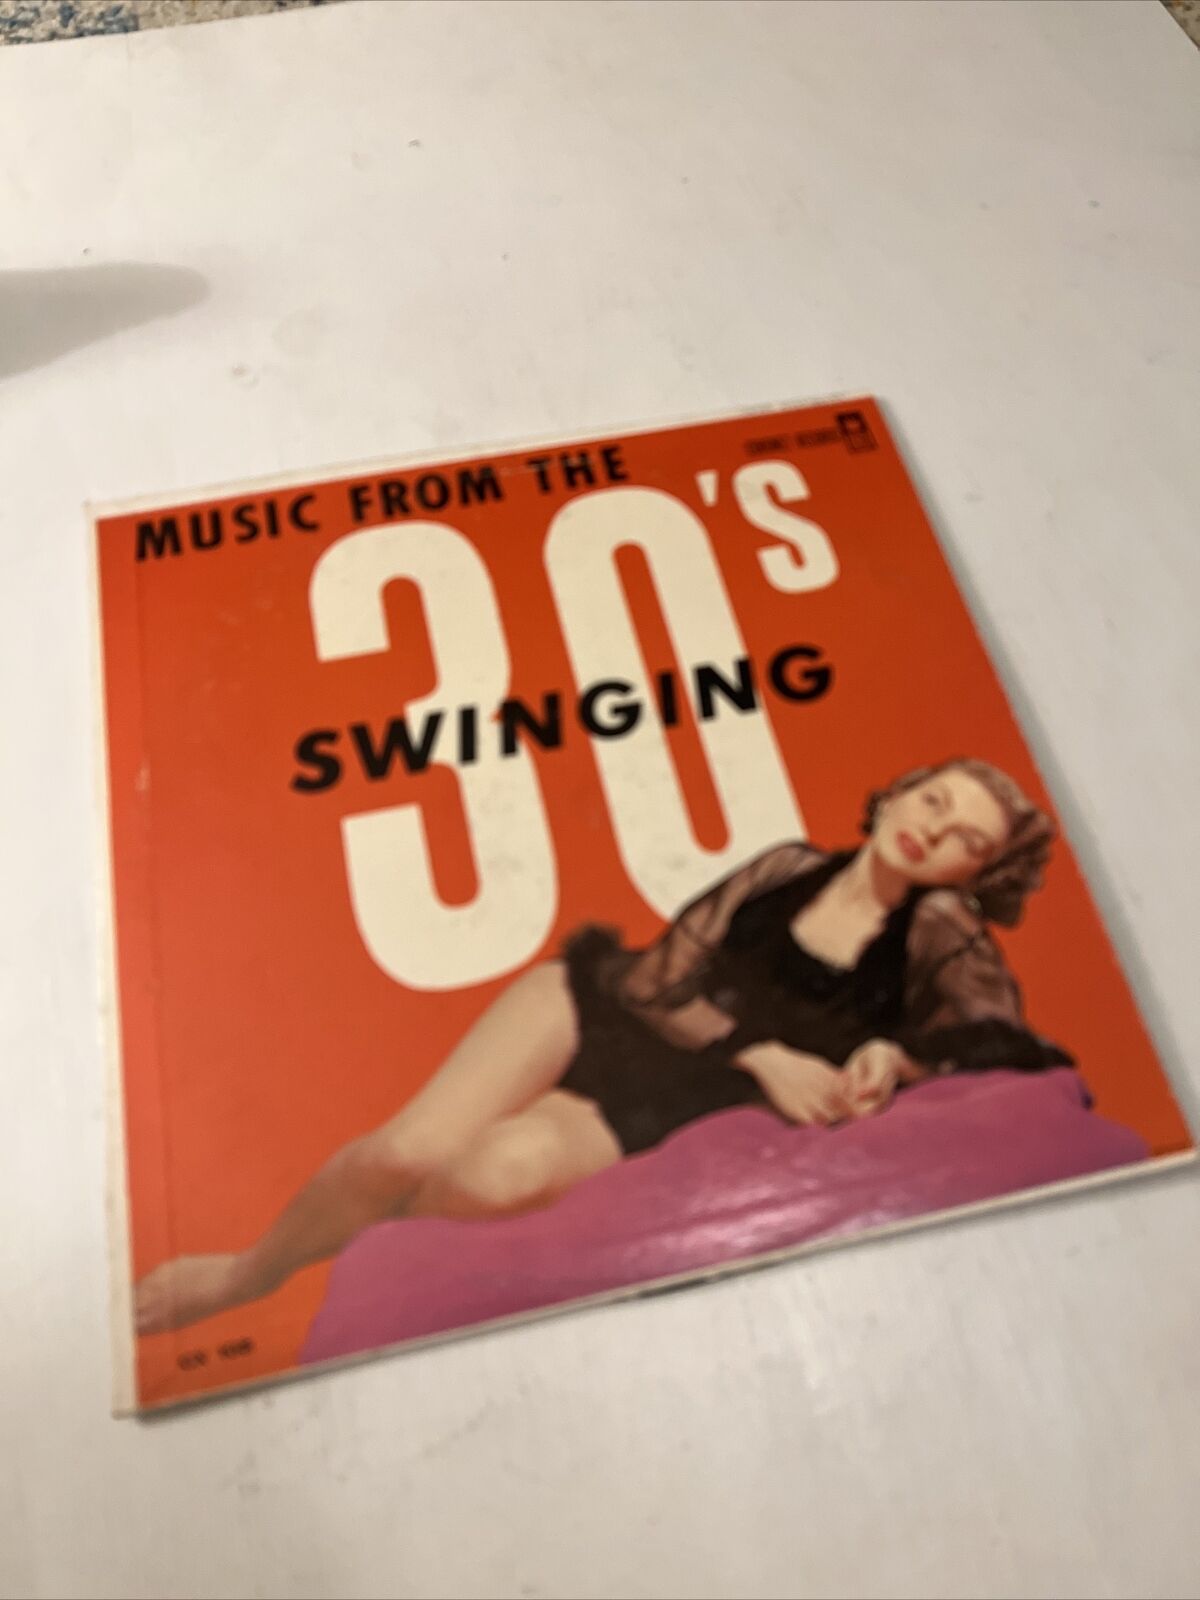 Music From the Swinging 30's Vintage Vinyl Record Coronet records CX-108 MONO